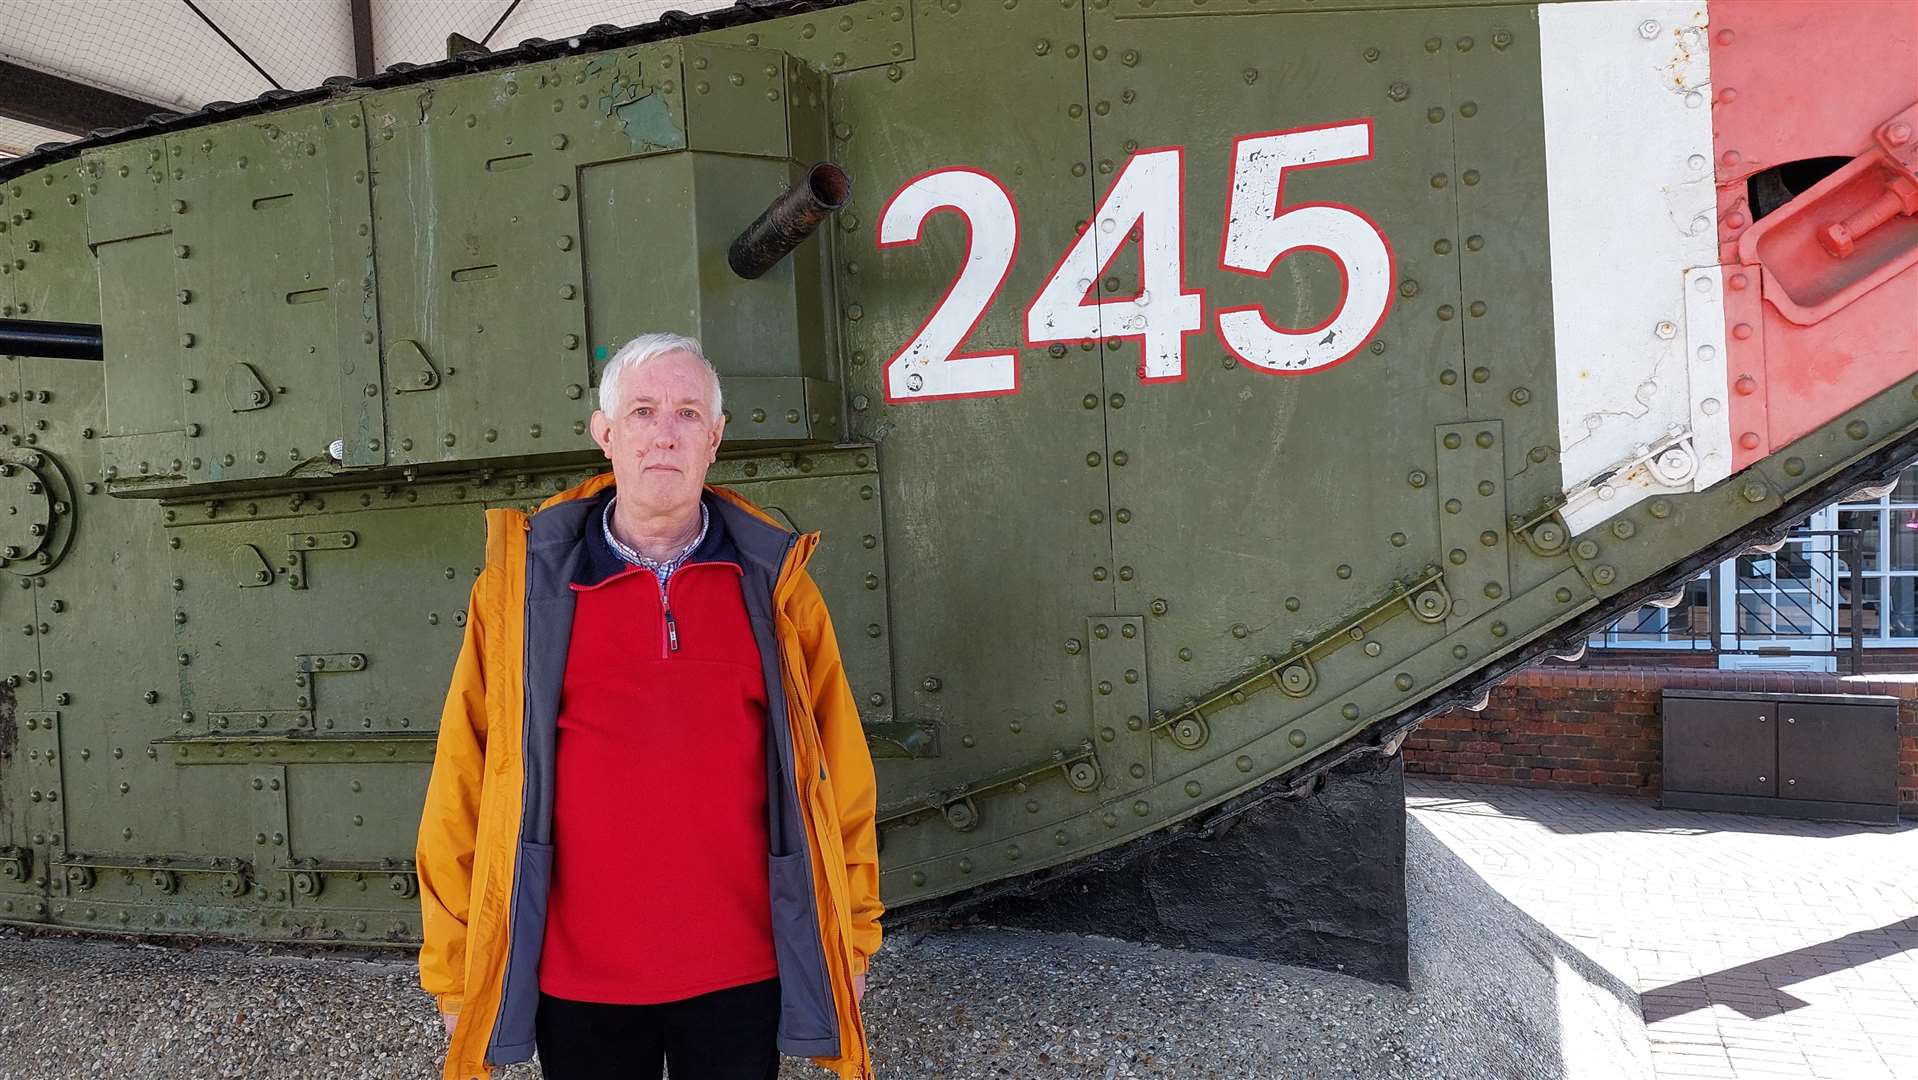 John Harris is calling for the tank war memorial to be restored